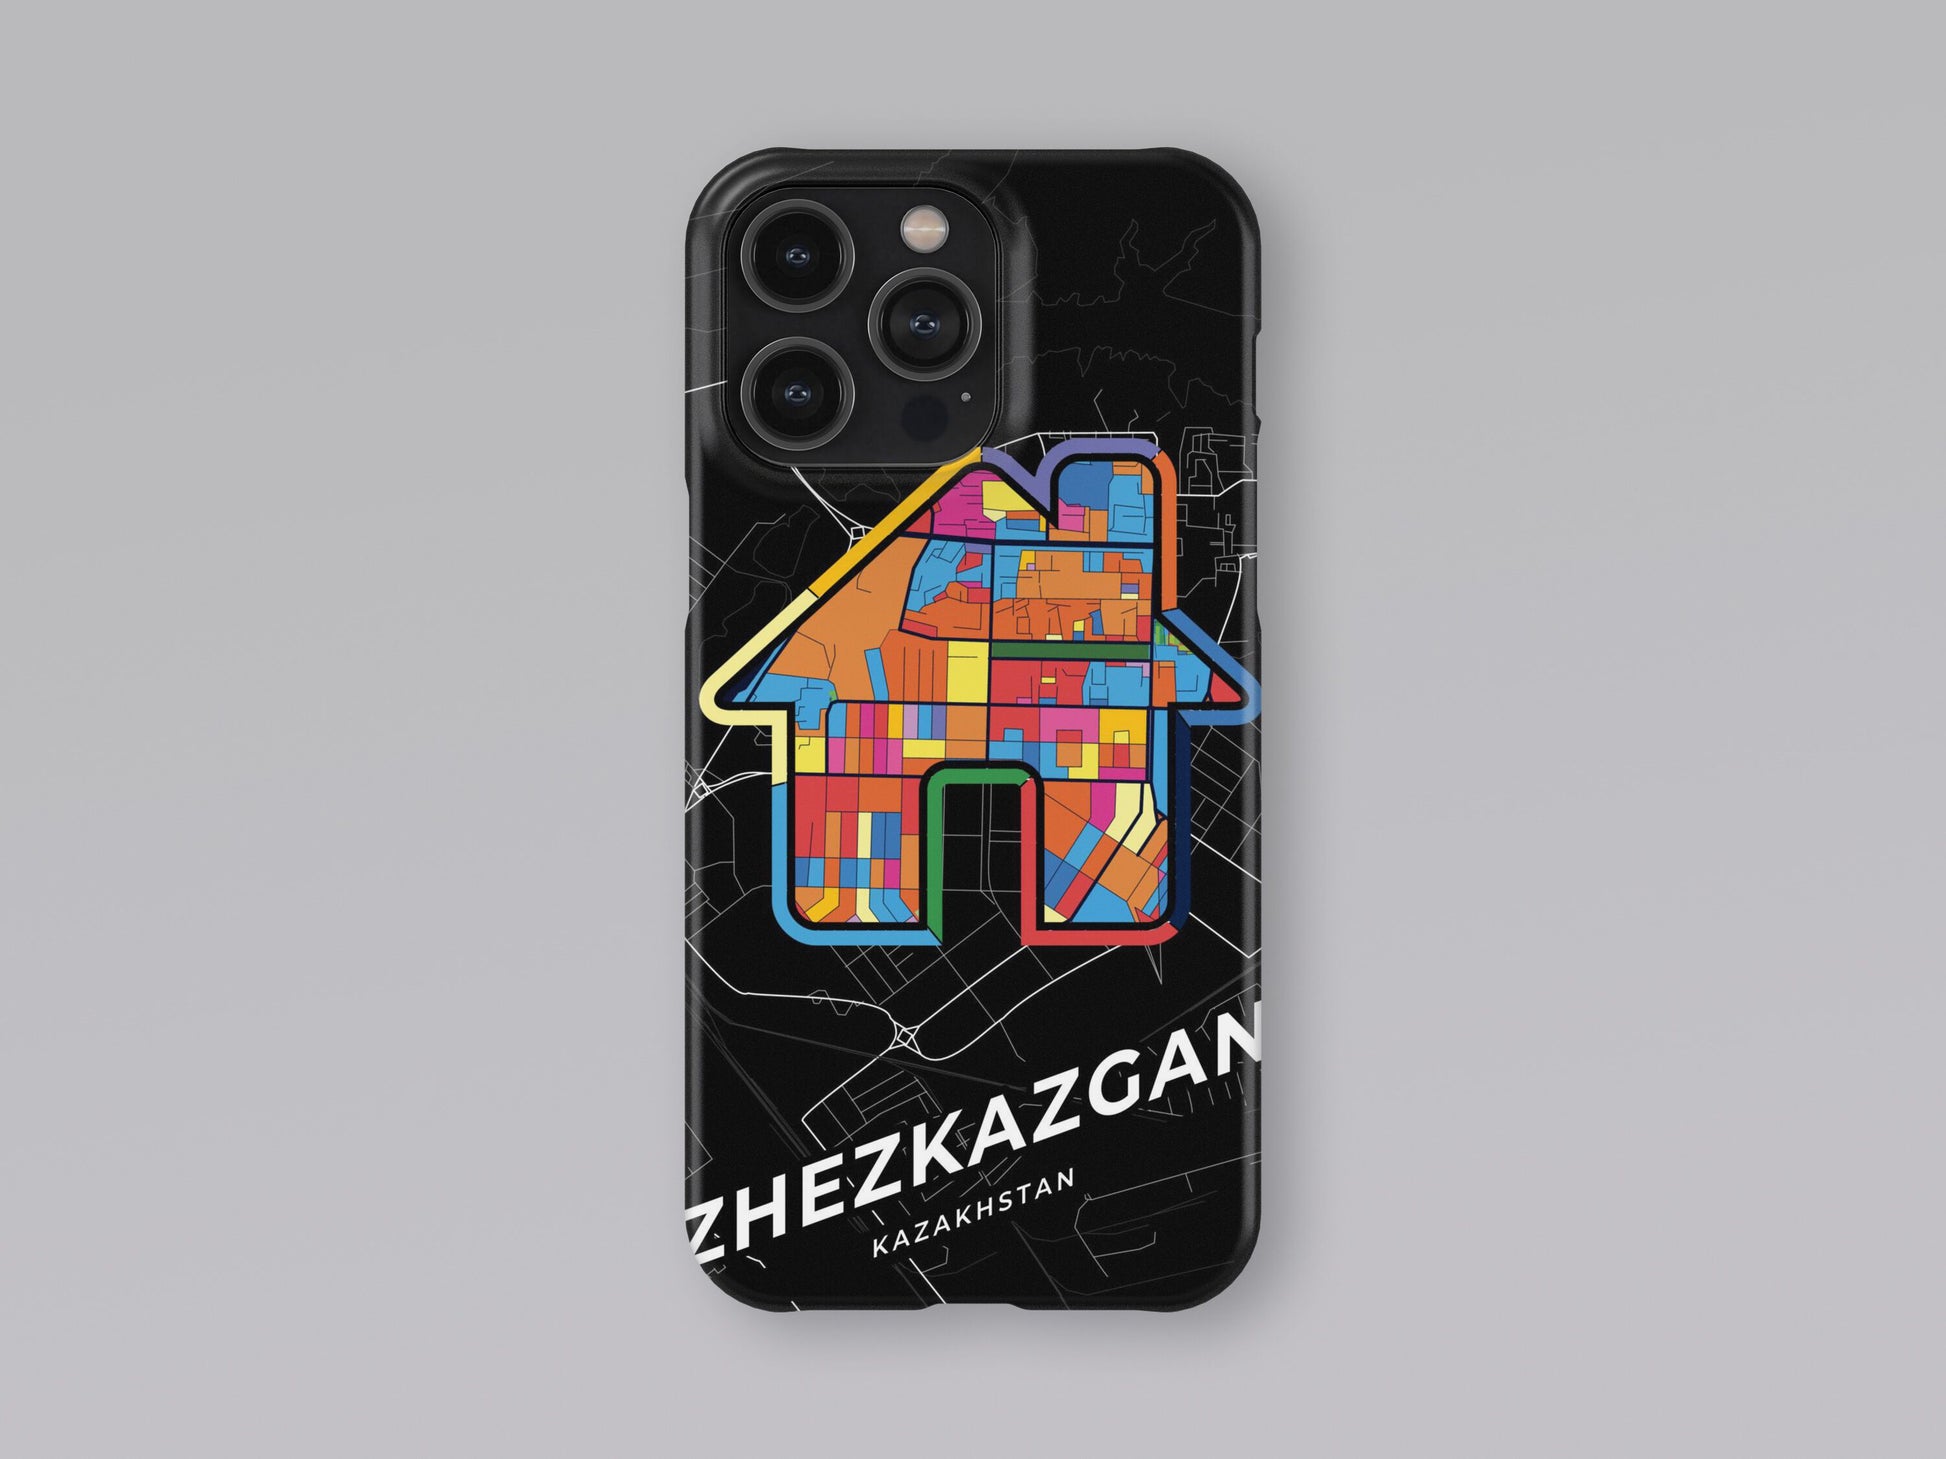 Zhezkazgan Kazakhstan slim phone case with colorful icon 3